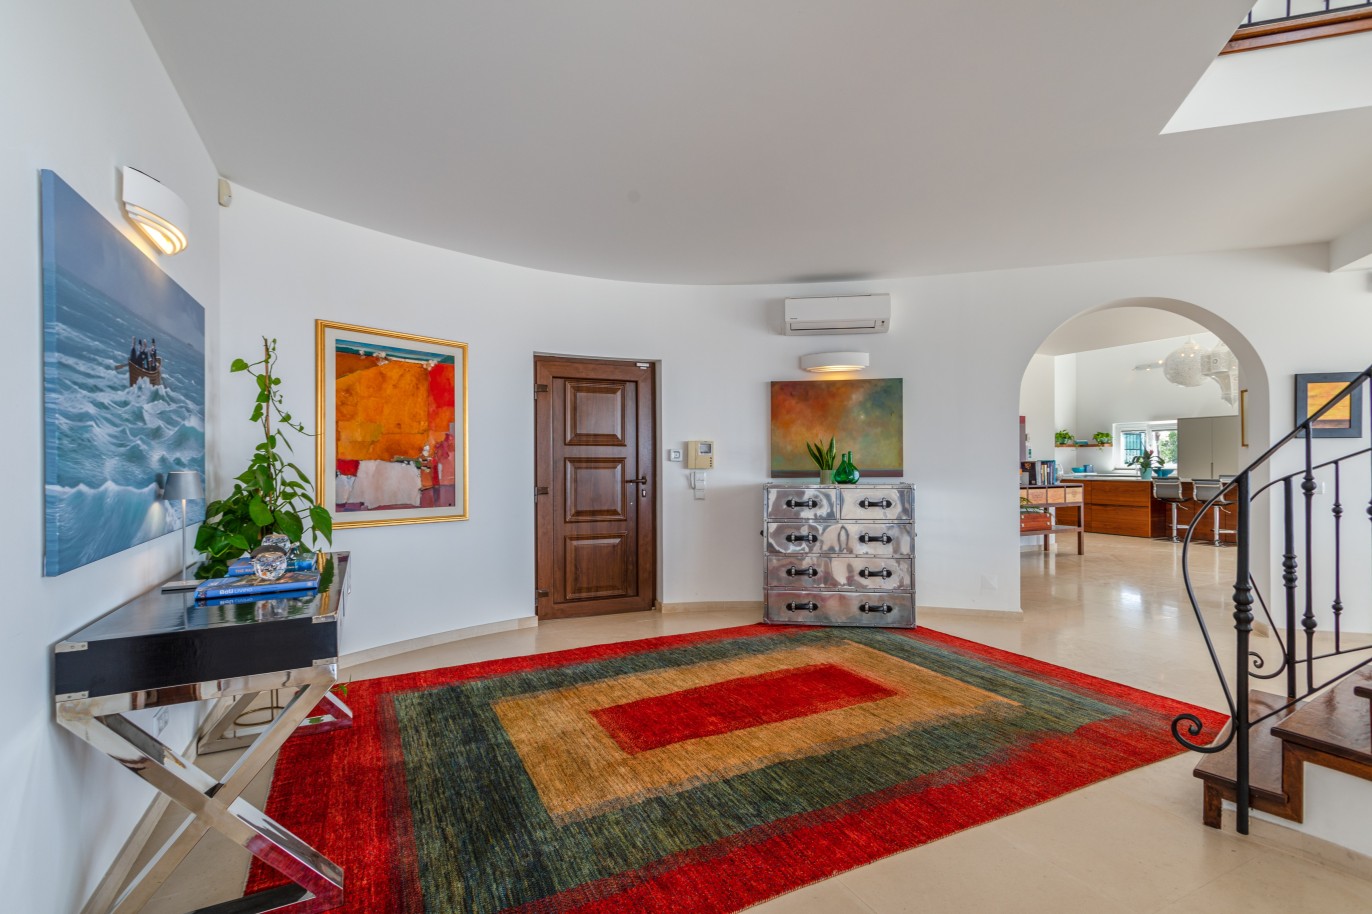 4 Bedroom Luxury Villa with pool for sale in Silves, Algarve_227323